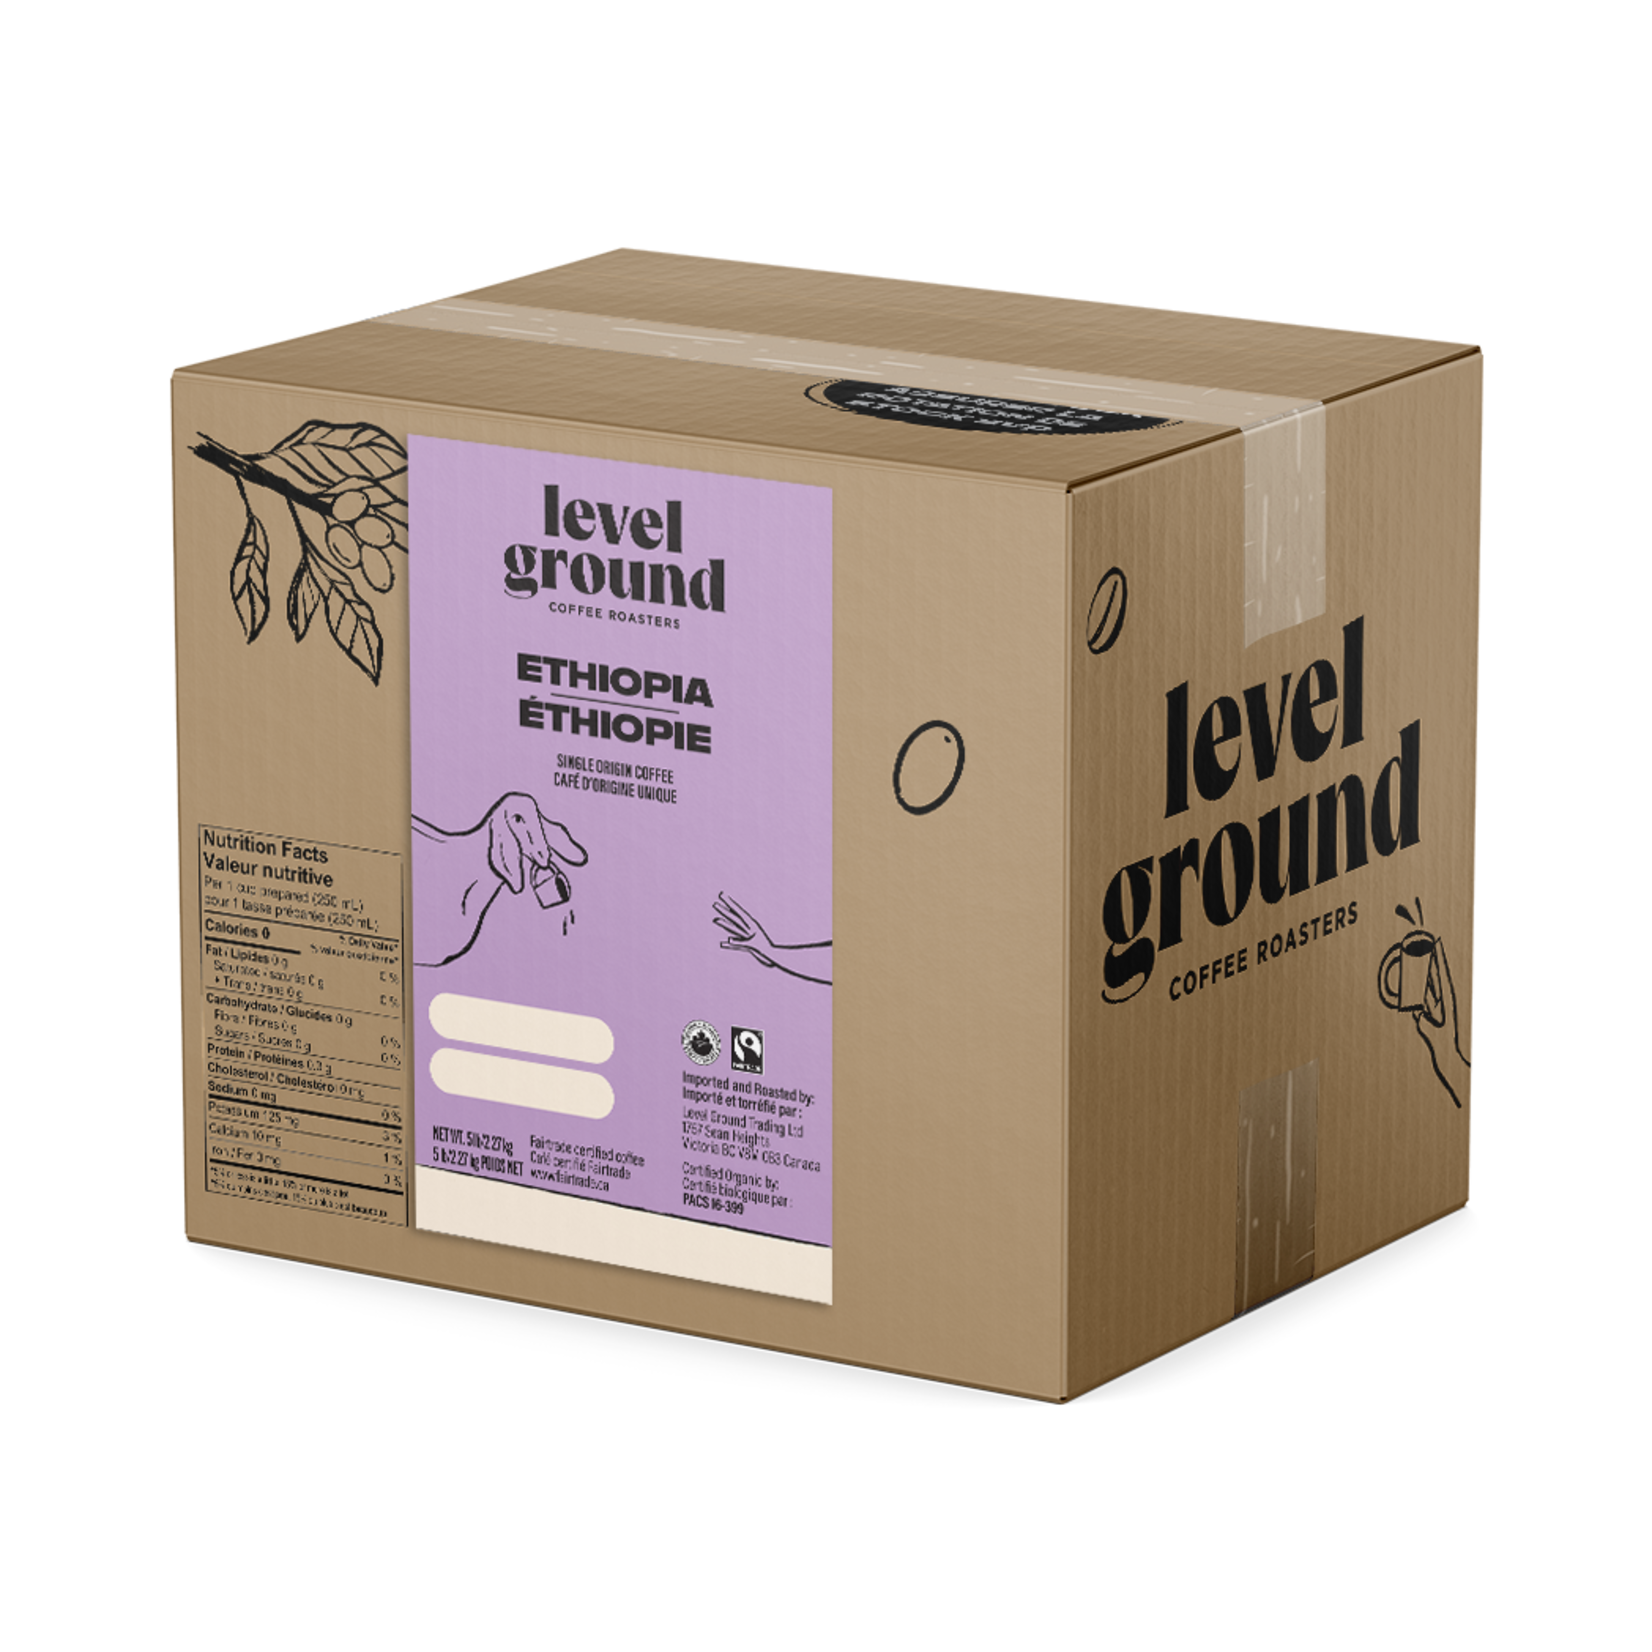 Level Ground Coffee - Level Ground Ethiopia Bean - 5lb Box